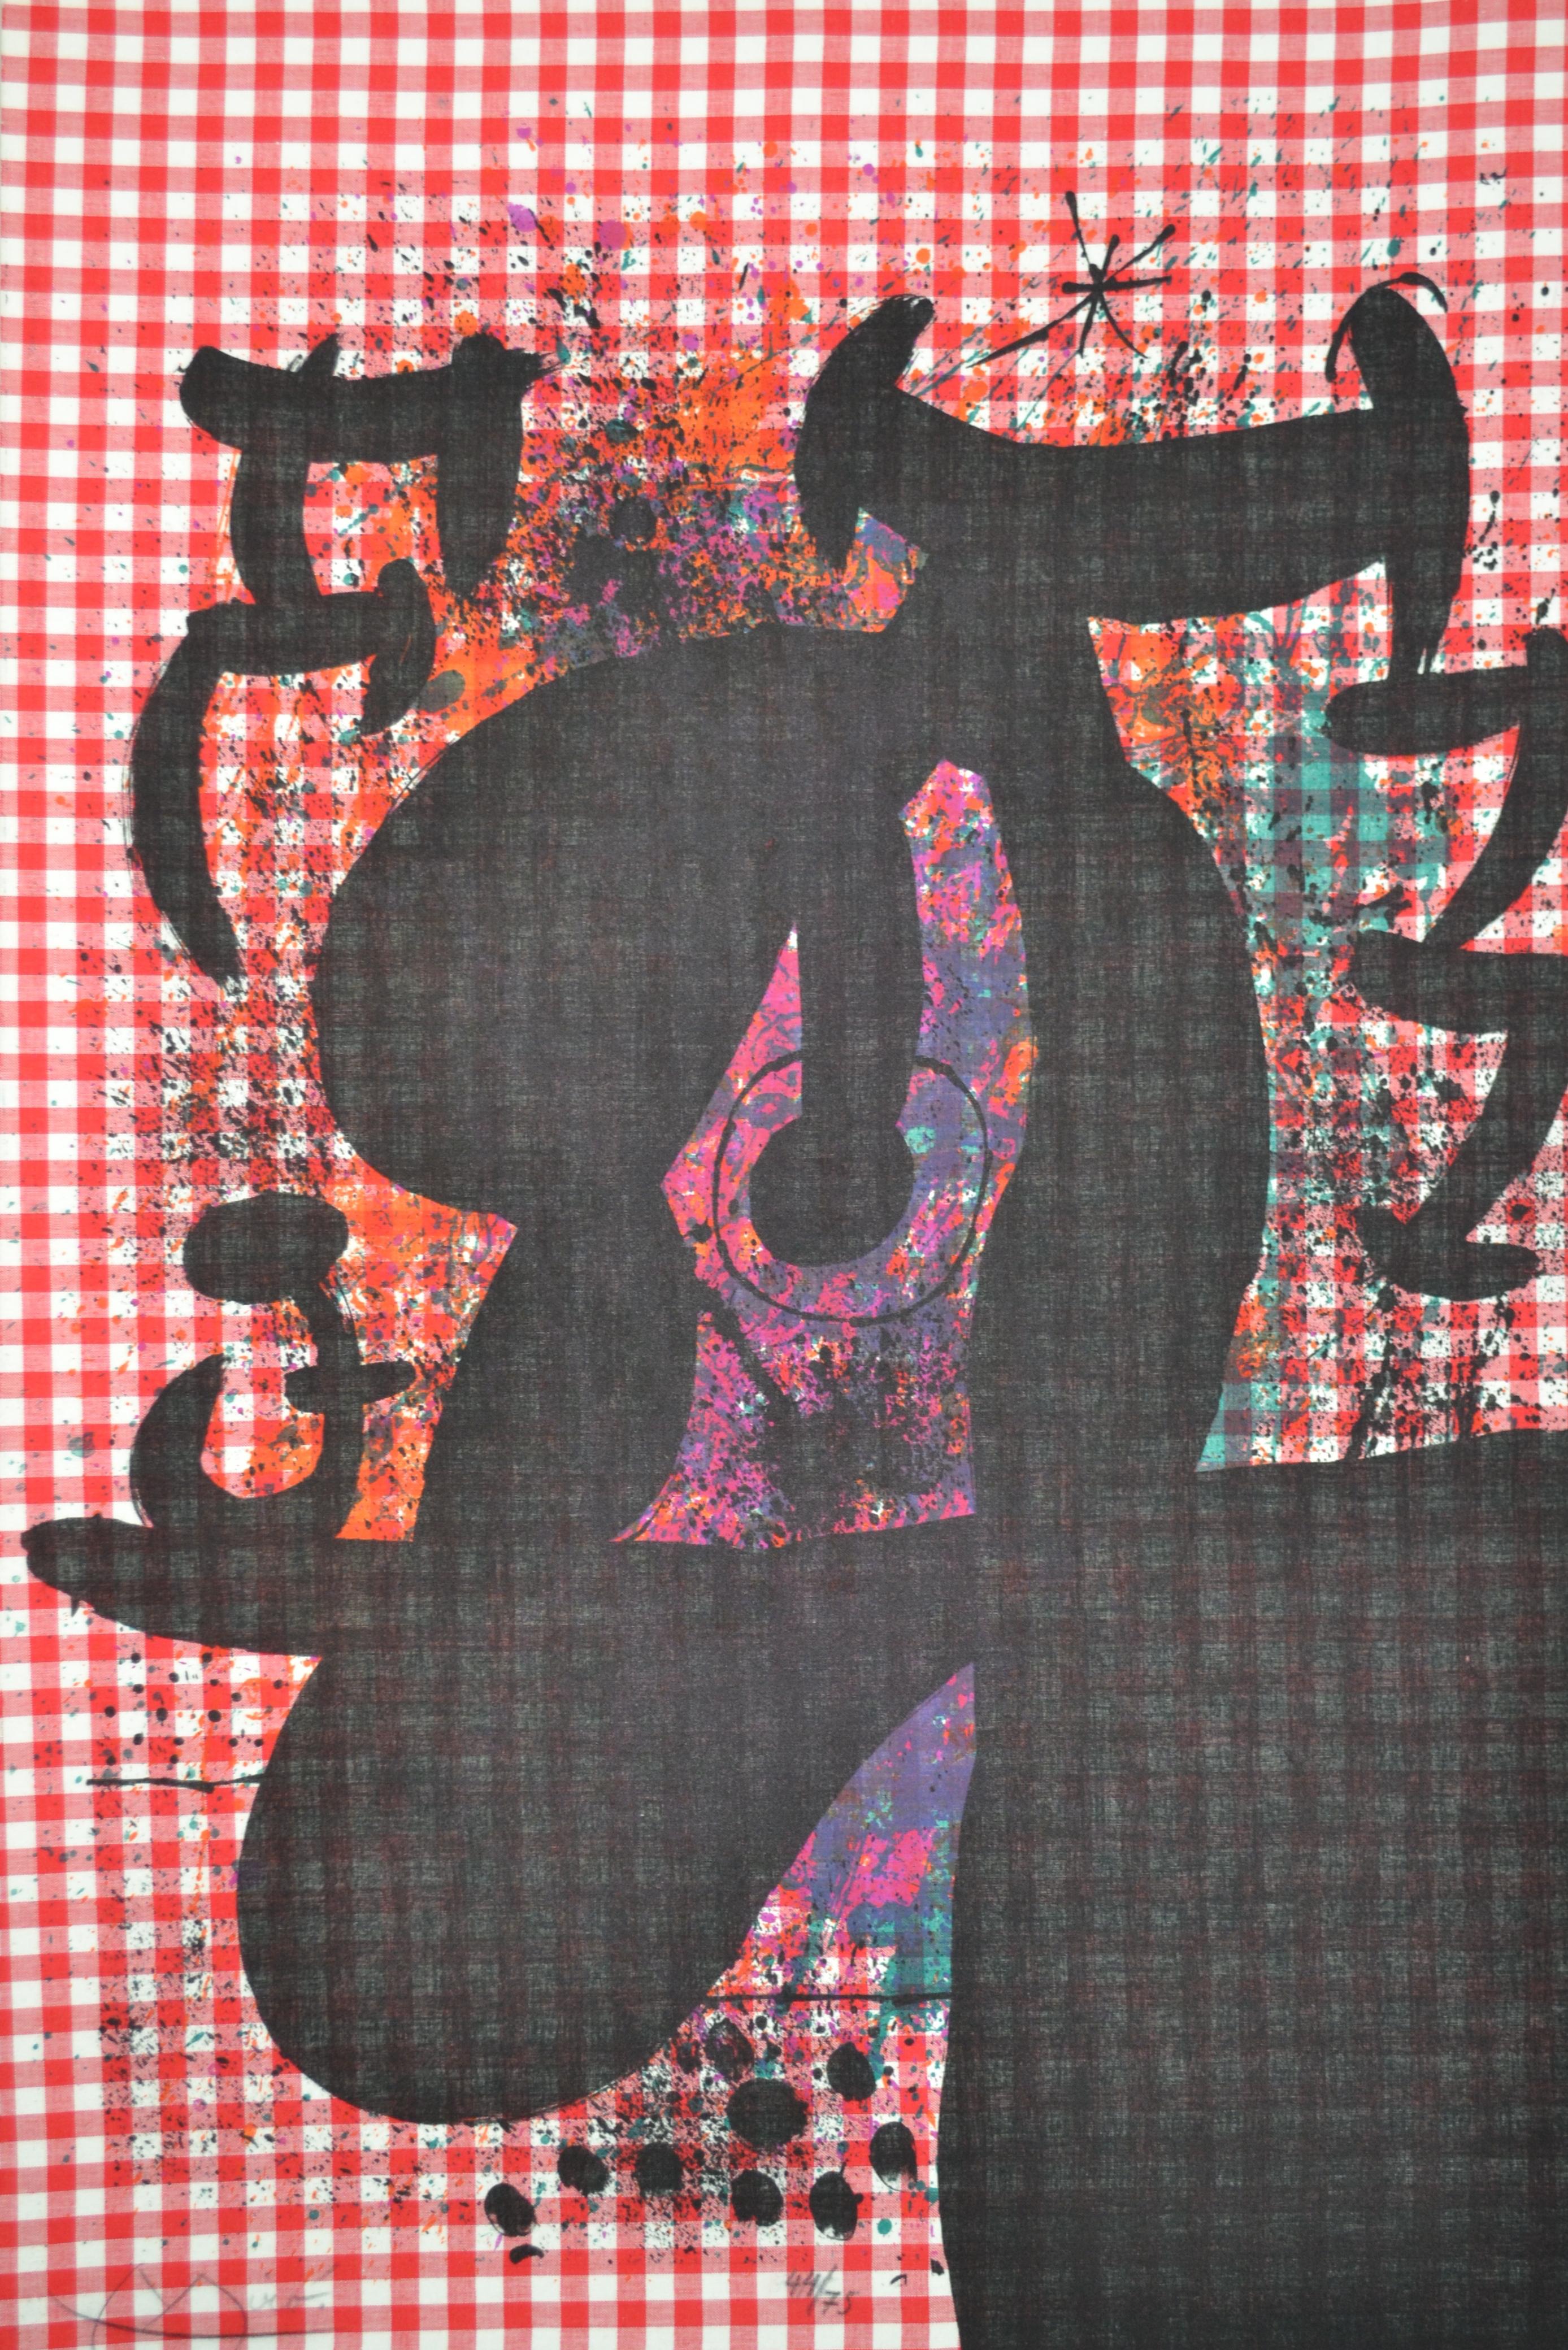 Le Bagnard - M594 - Print by Joan Miró